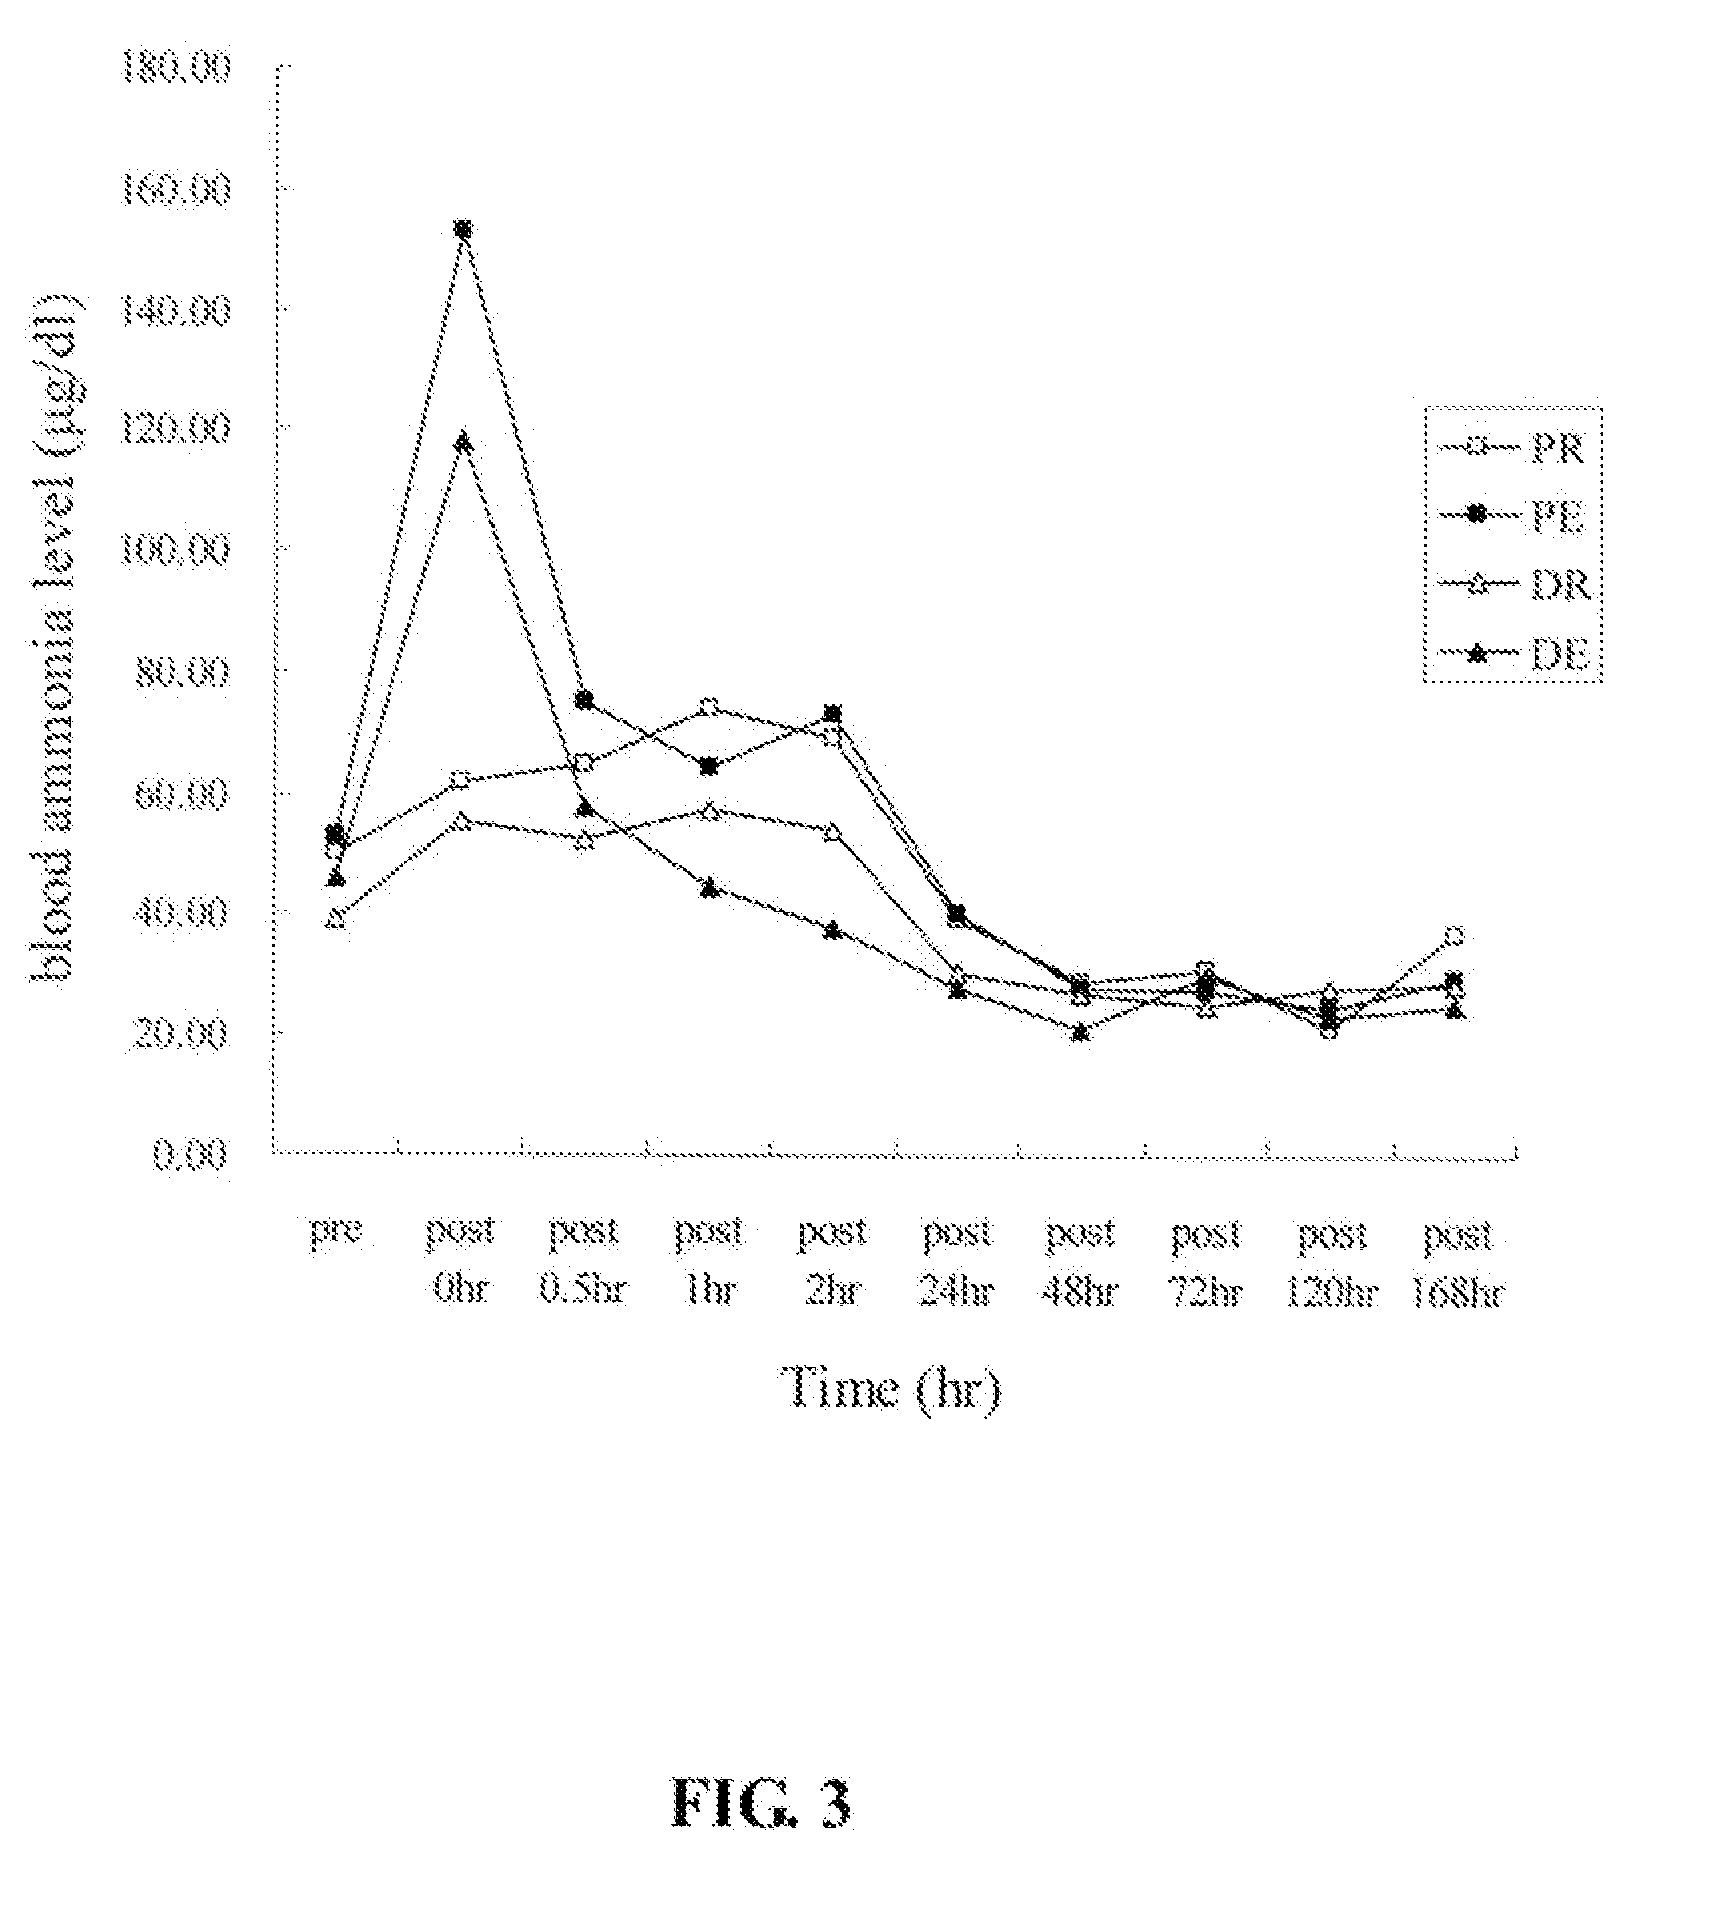 Anti-fatigue cyclohexenone compounds from antrodia camphorata